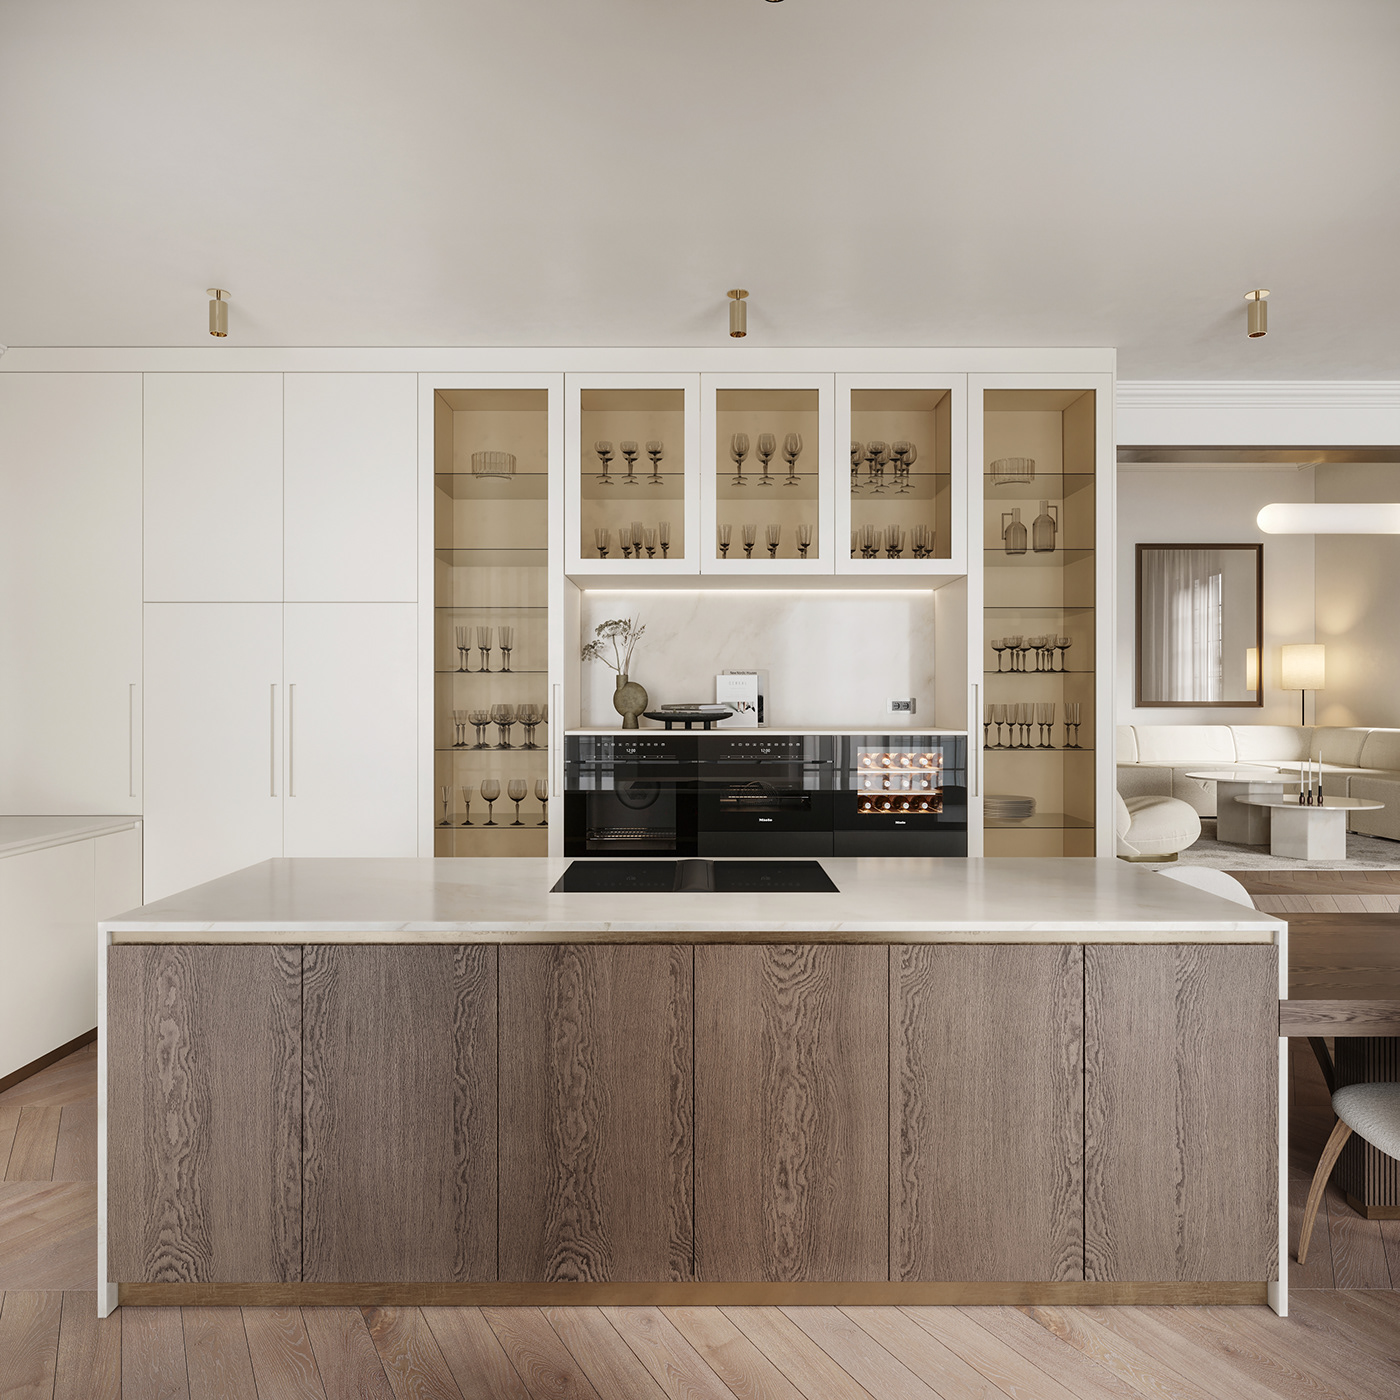 3D corona design GUBI Interior kitchen Render Scandinavian Stockholm Sweden